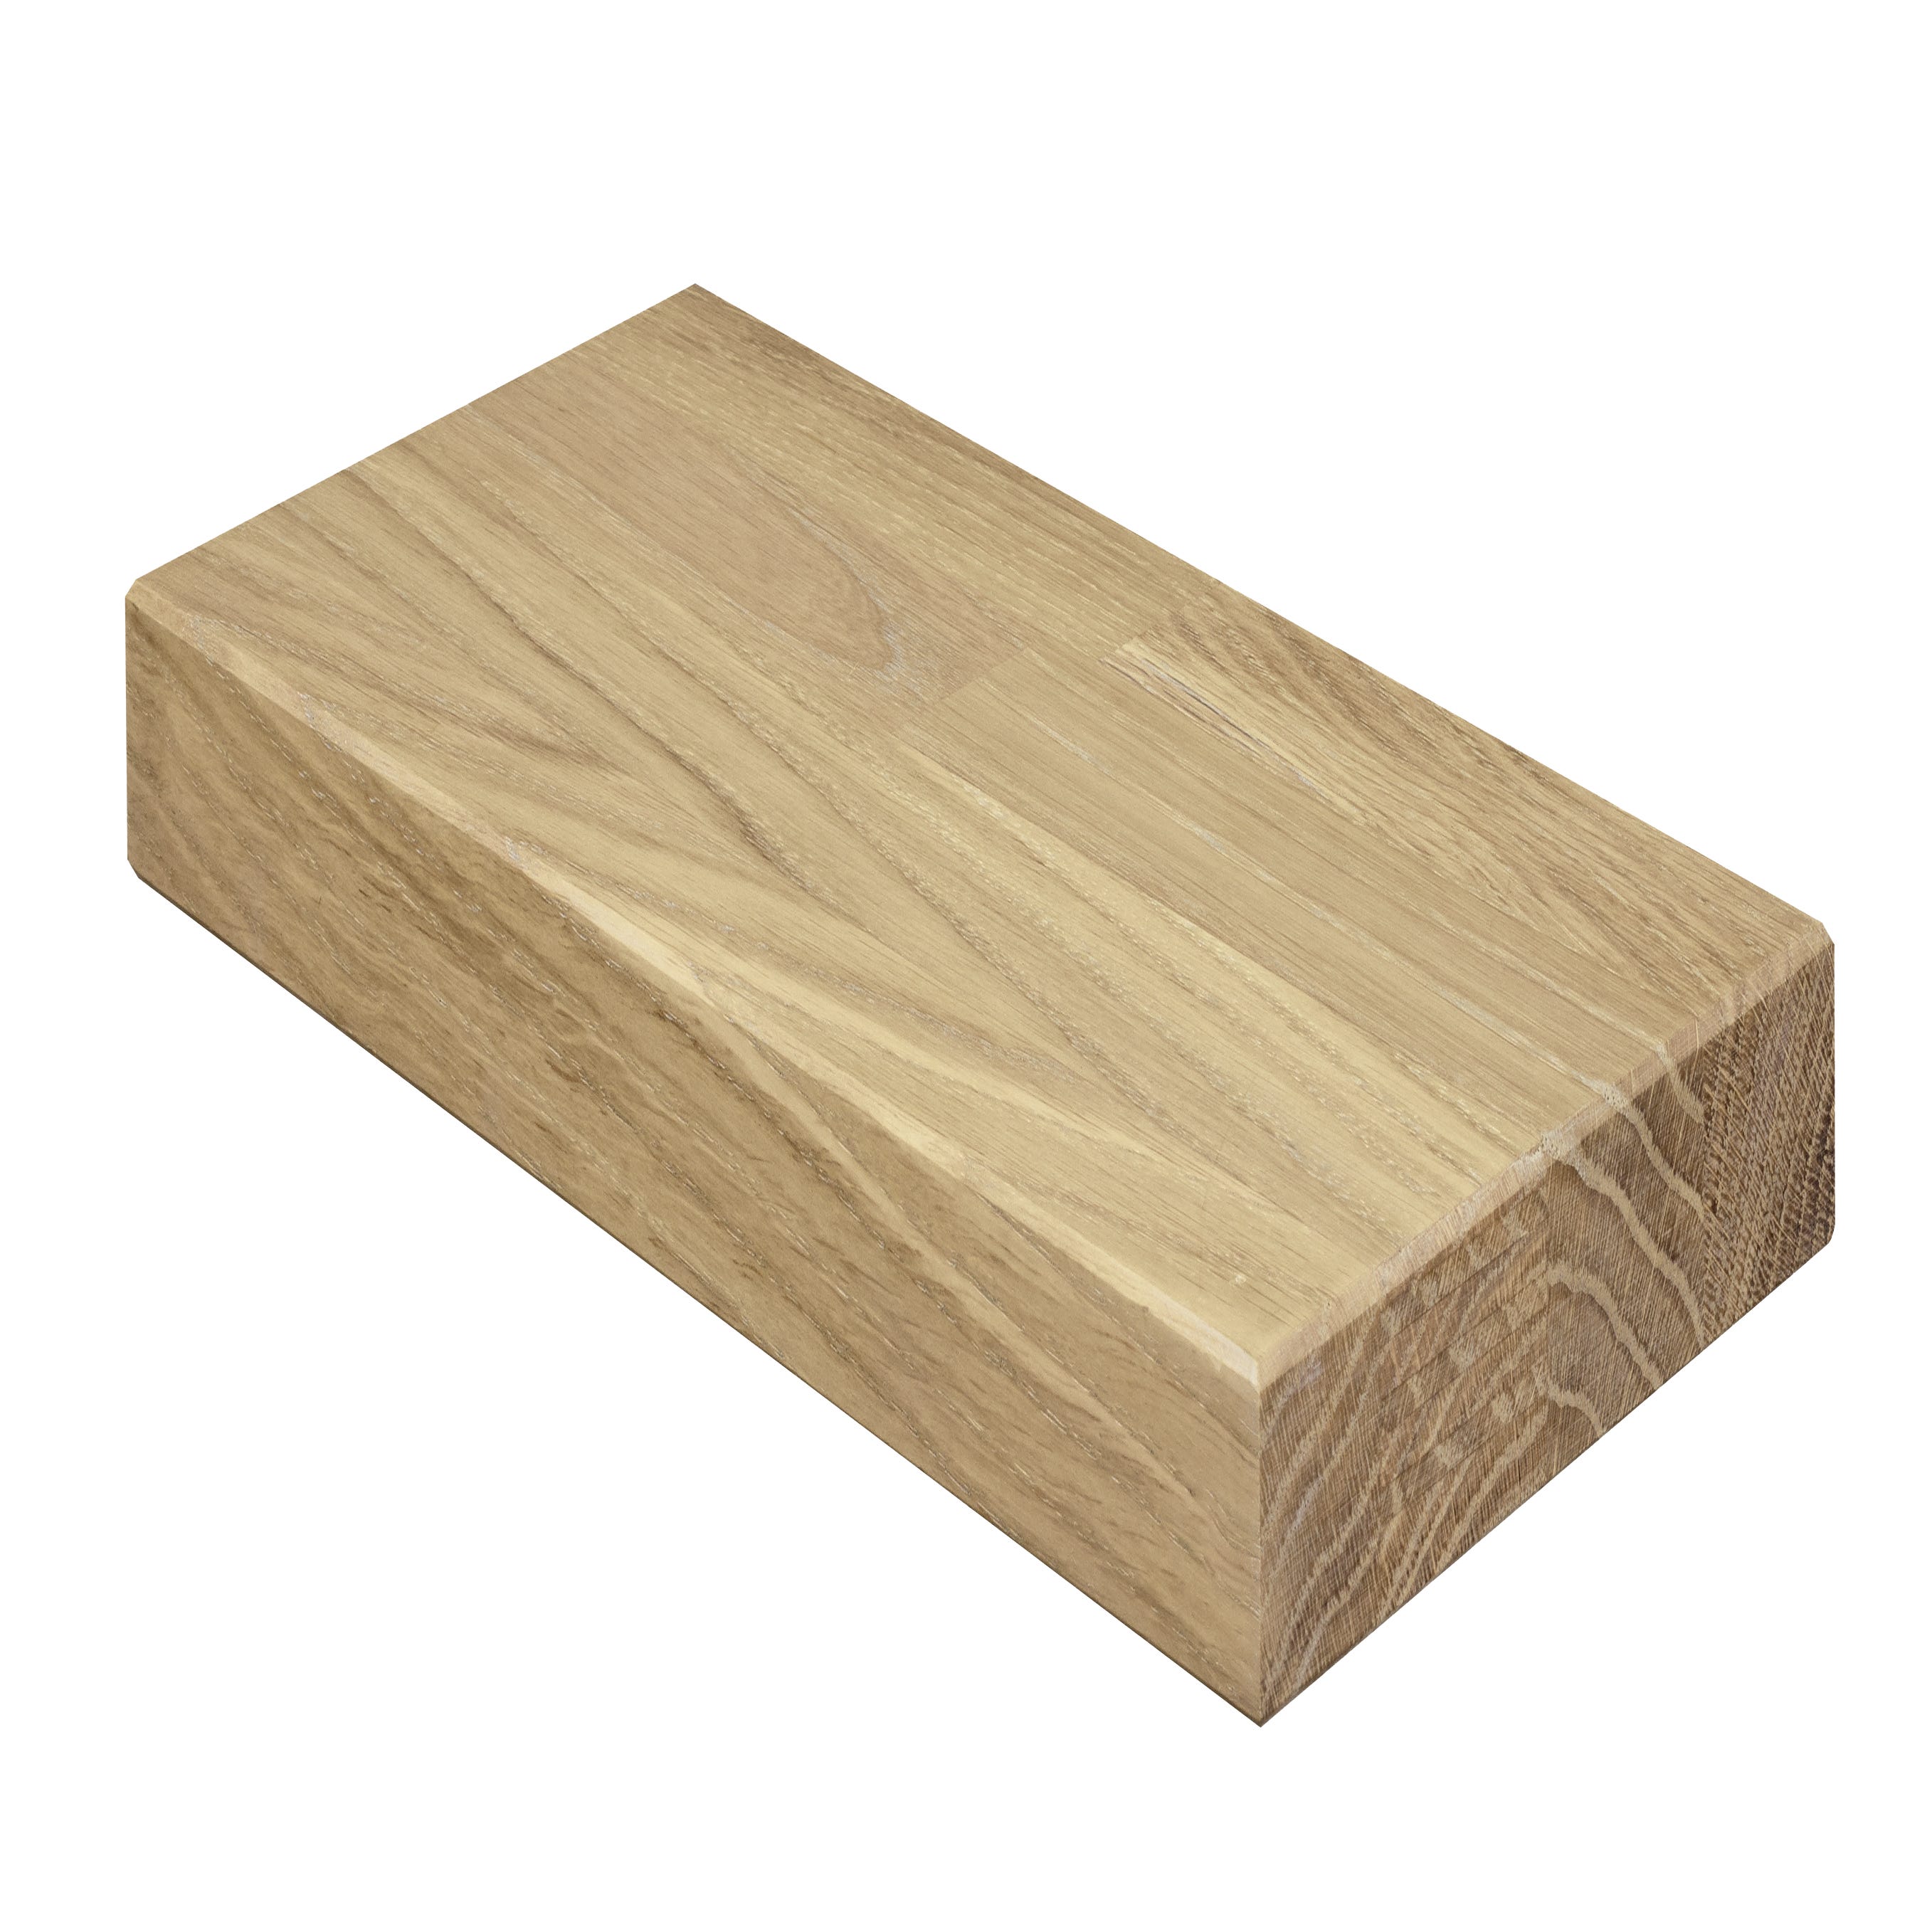 Encimeras de madera maciza - A medida